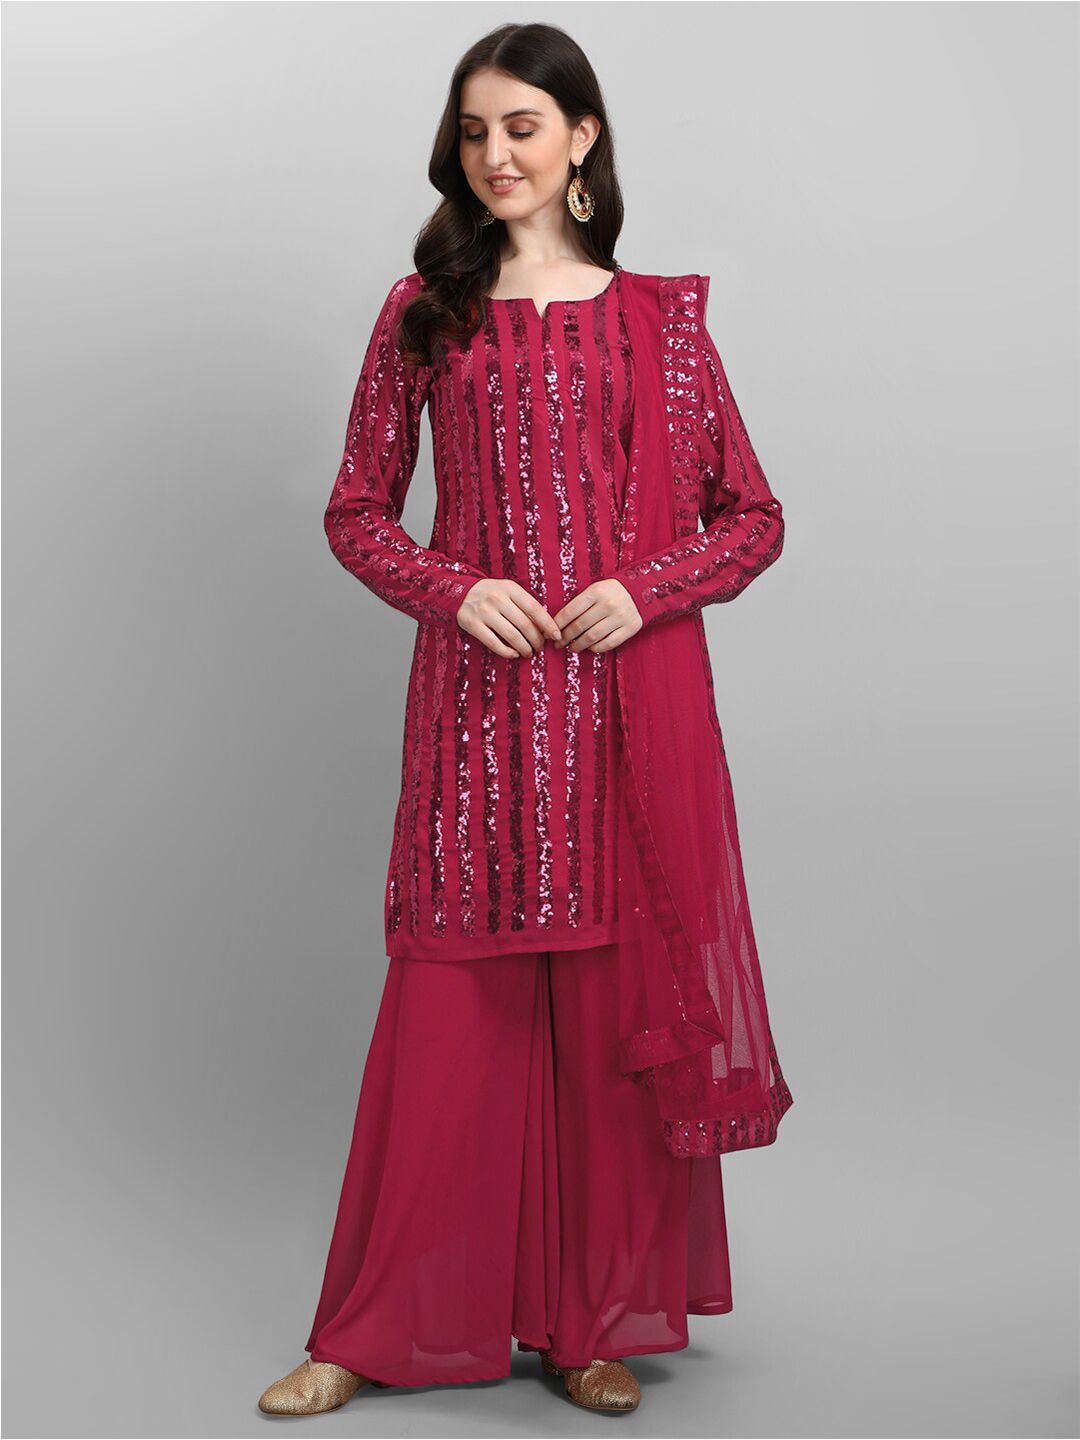 JATRIQQ Red Embroidered Silk Georgette Semi-Stitched Dress Material Price in India